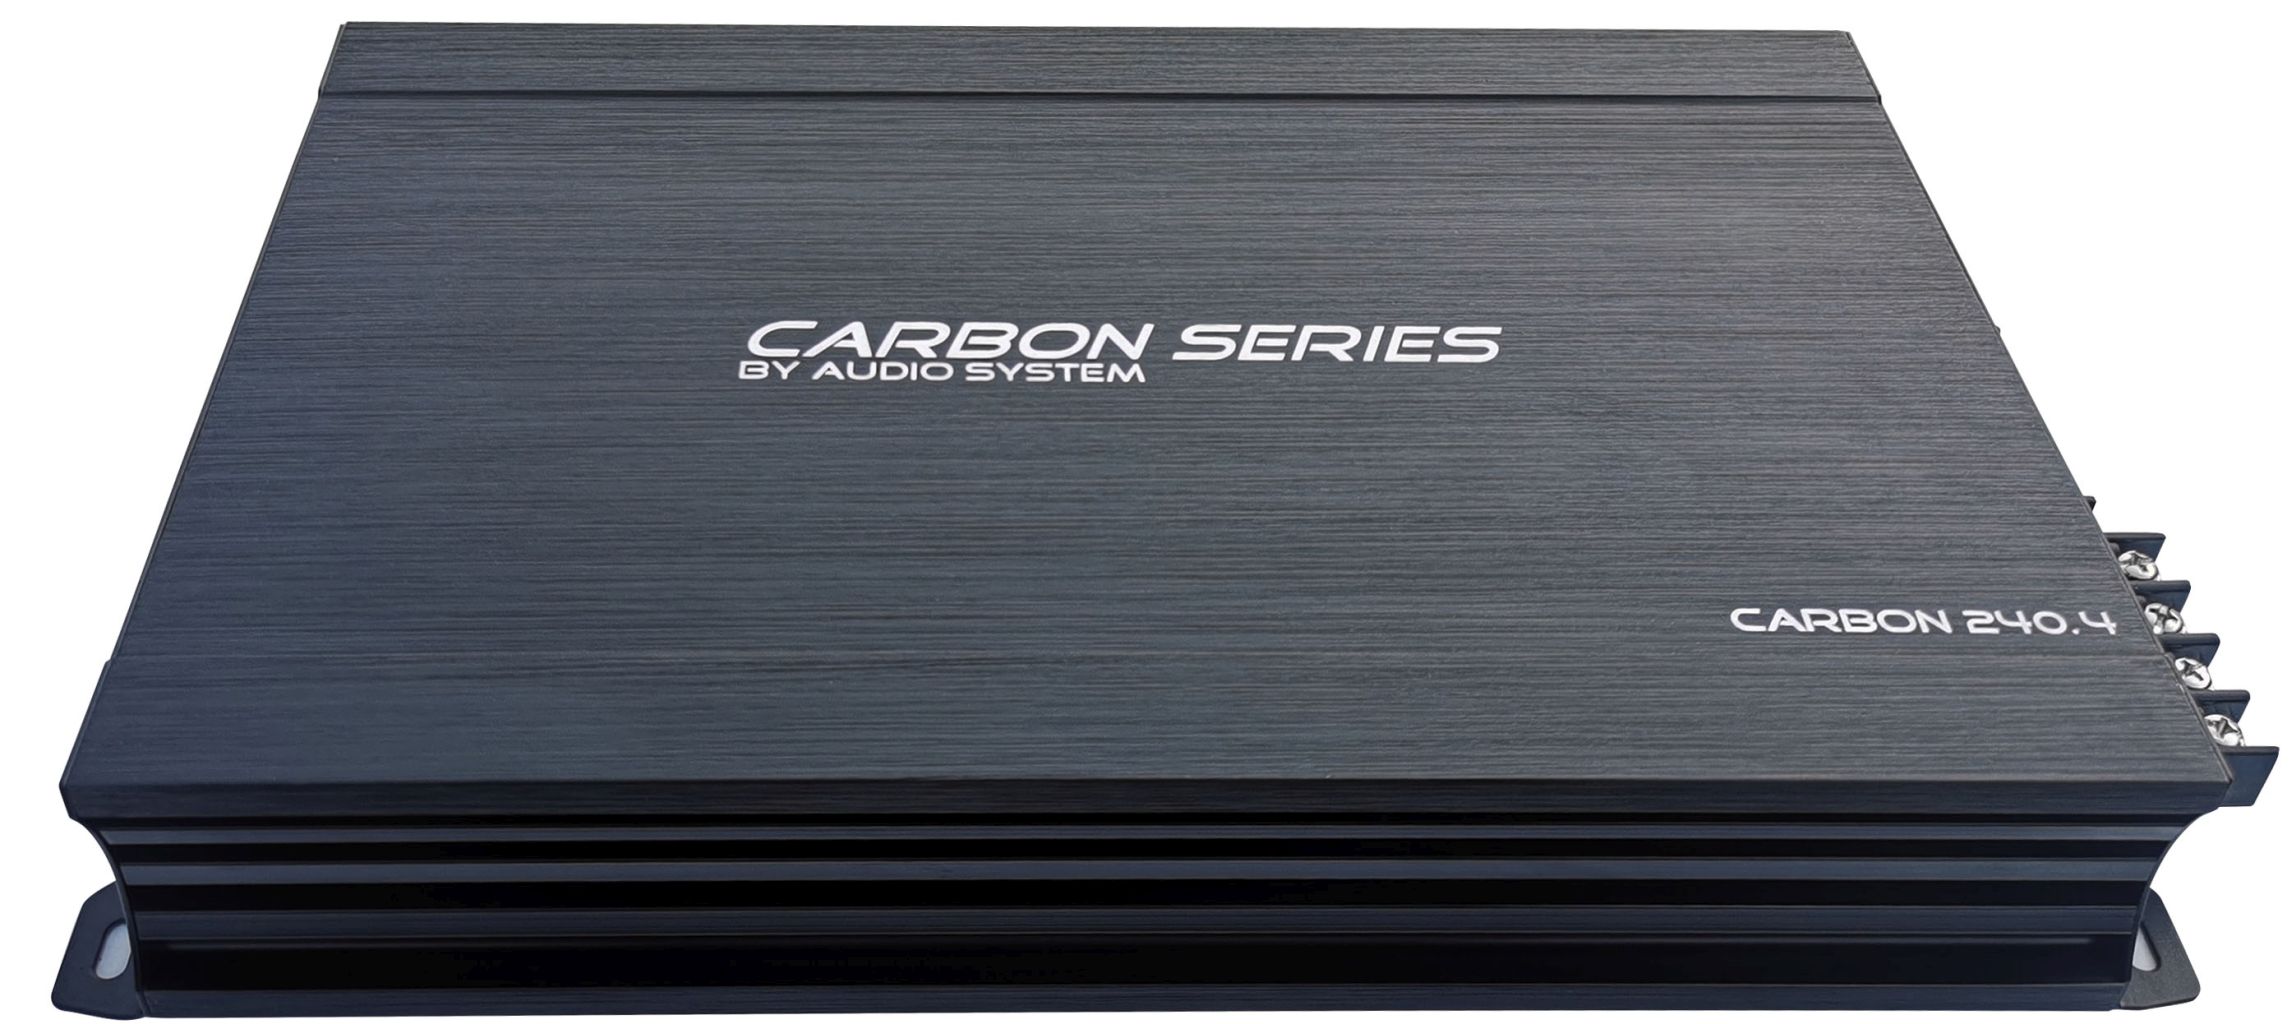  Audio System CARBON 240.4 - 4 Kanal A/B Verstärker 400 Watt RMS CARBON-SERIES